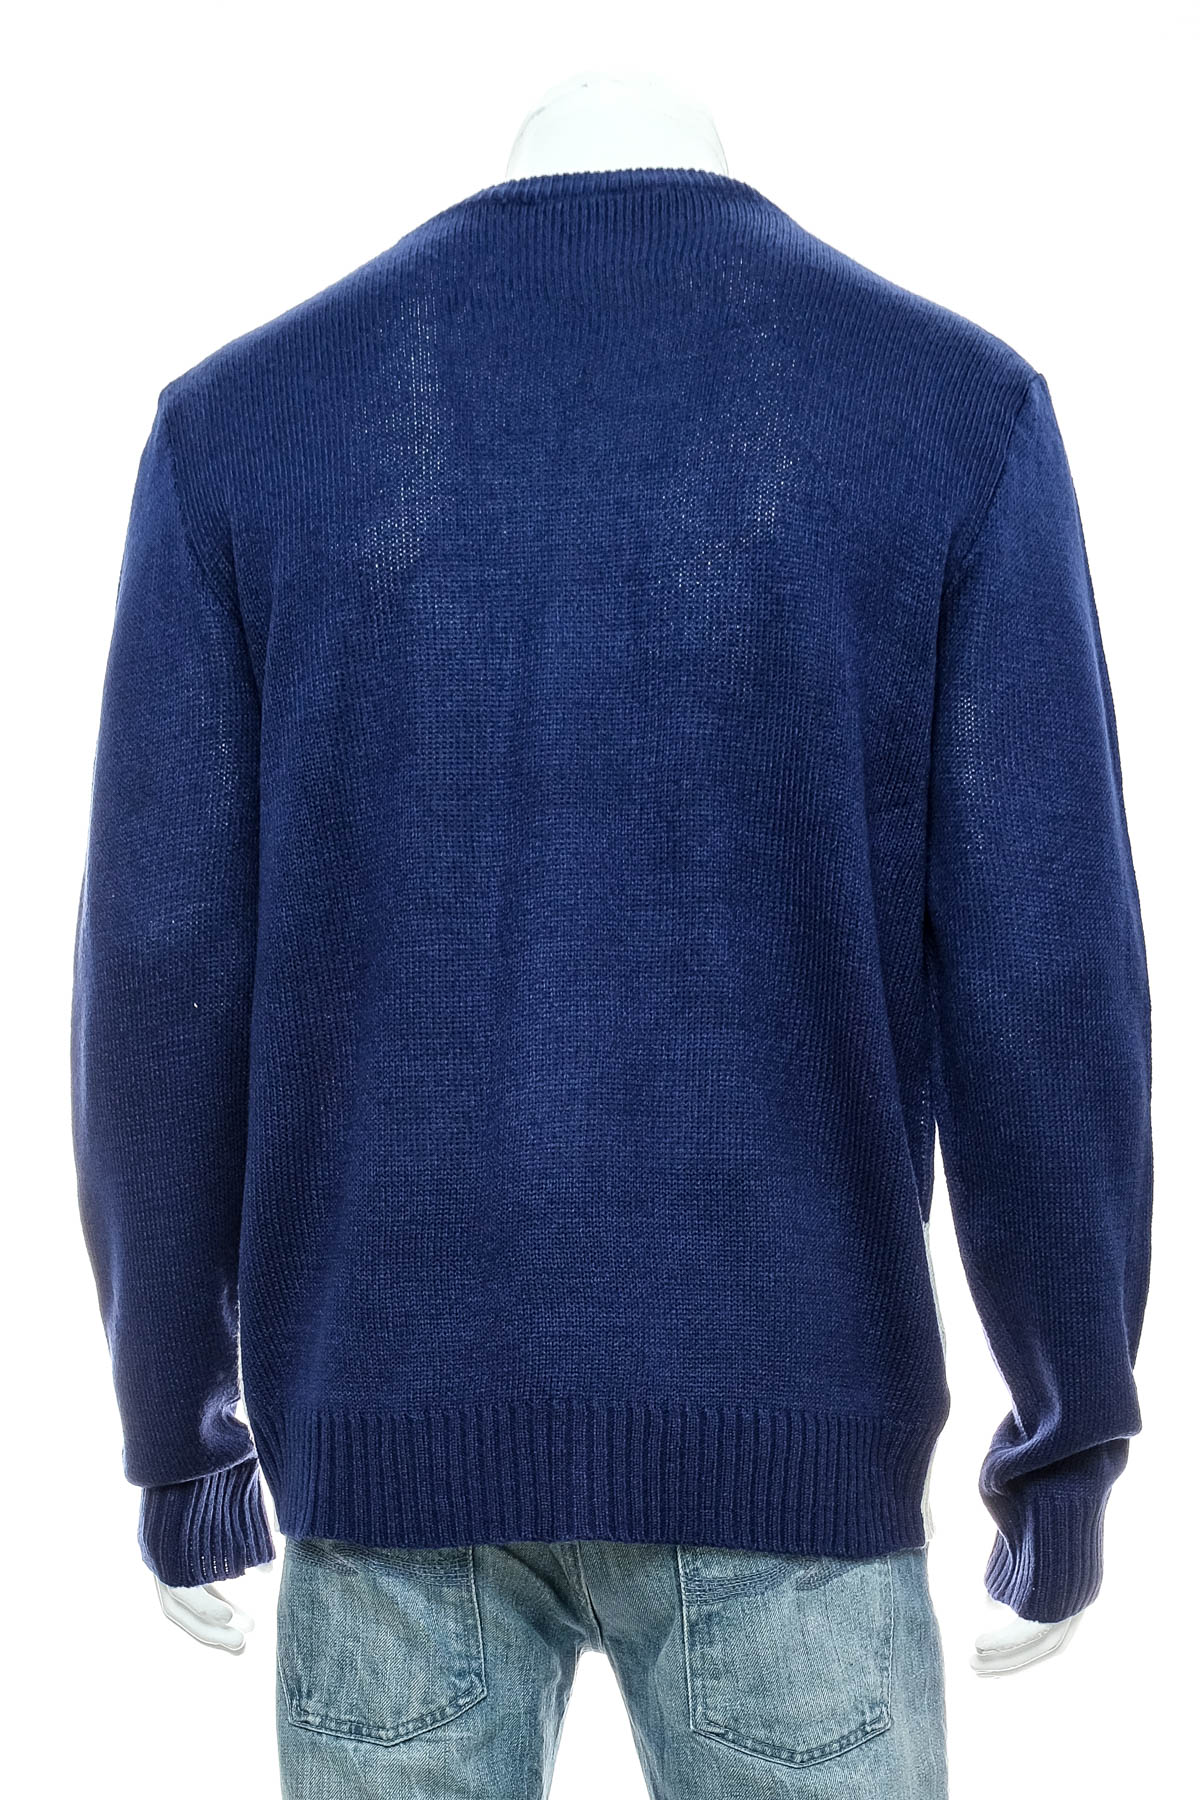 Men's sweater - United Labels - 1